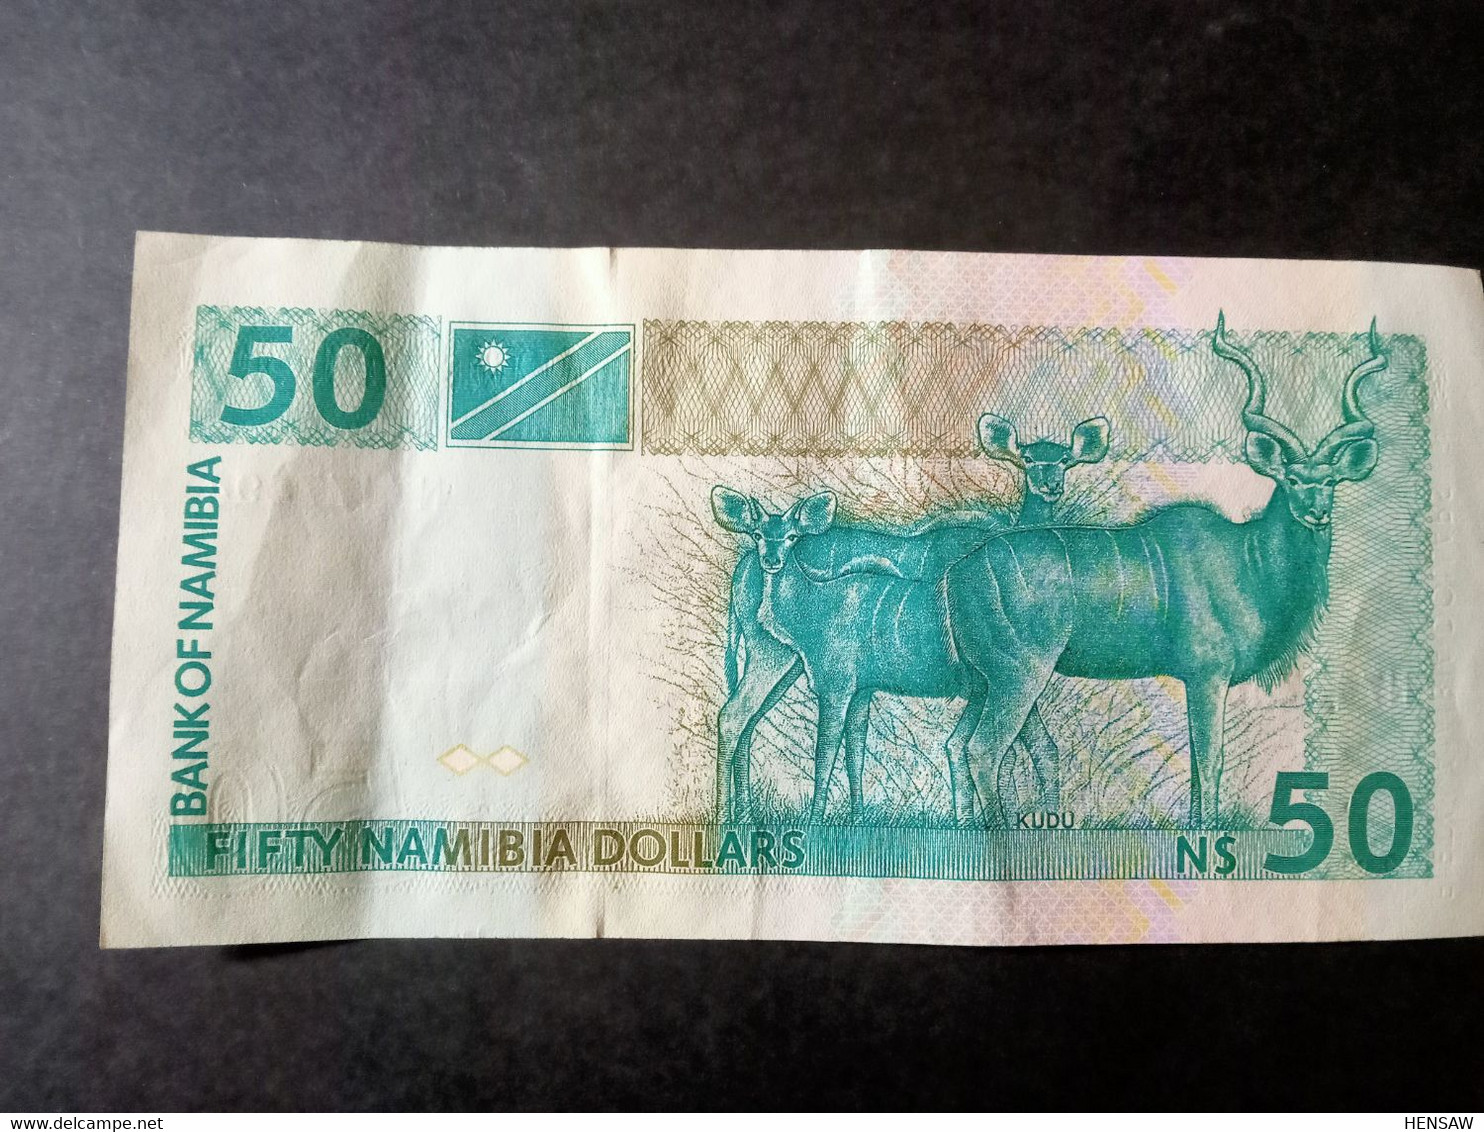 NAMIBIA 50 DOLLARS P 2 1993 USED USADO XF - Namibia